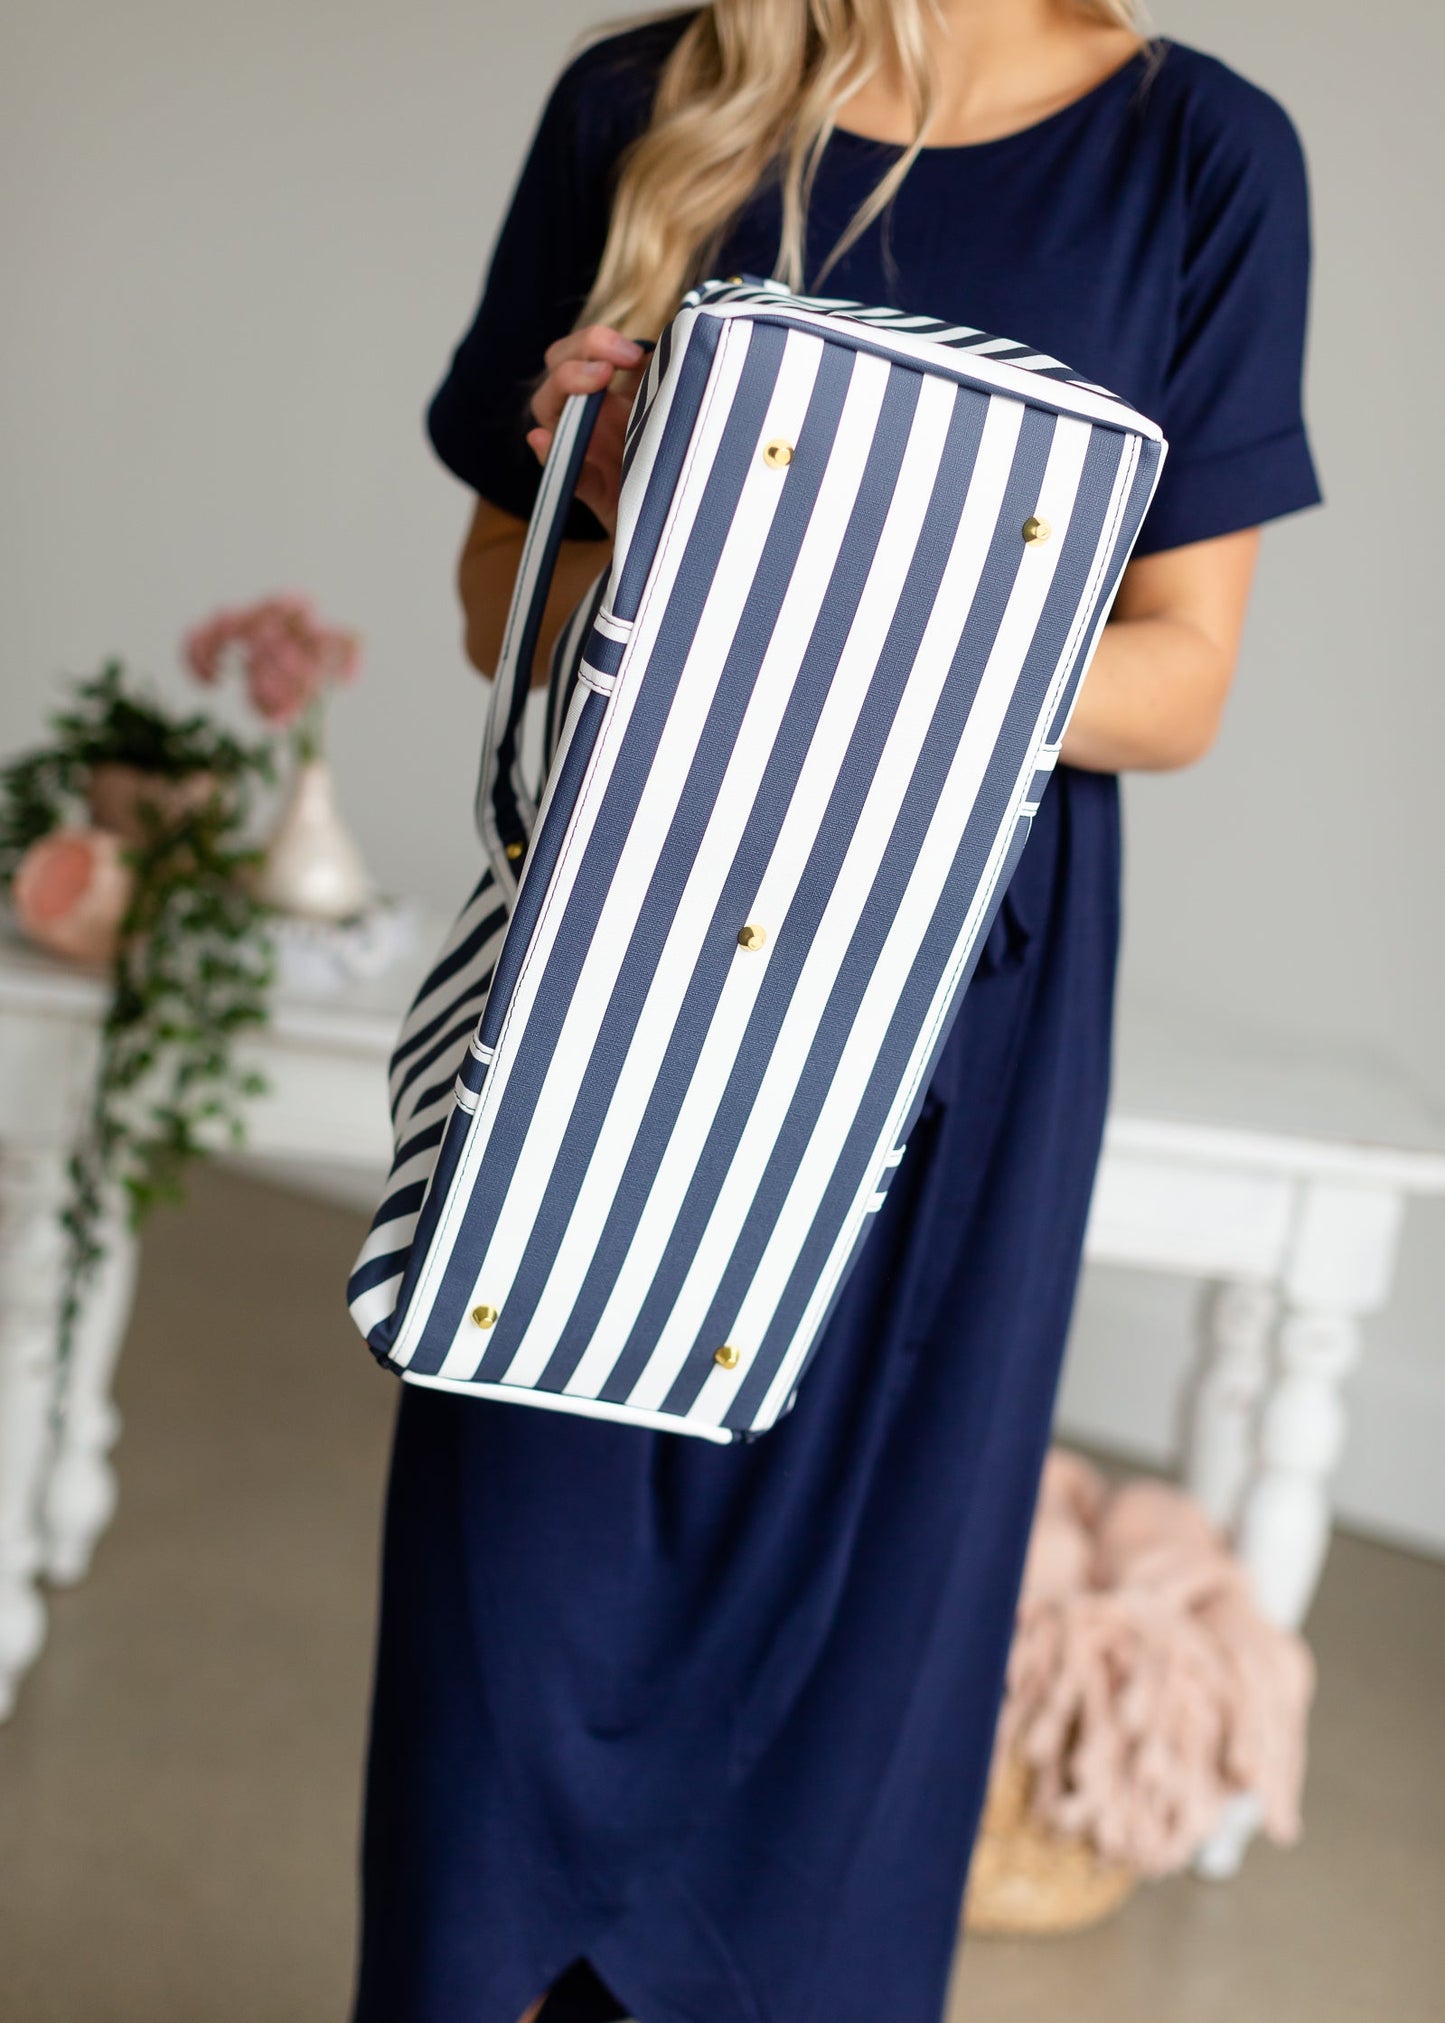 Navy + White Striped Weekender Duffle Bag - FINAL SALE Accessories